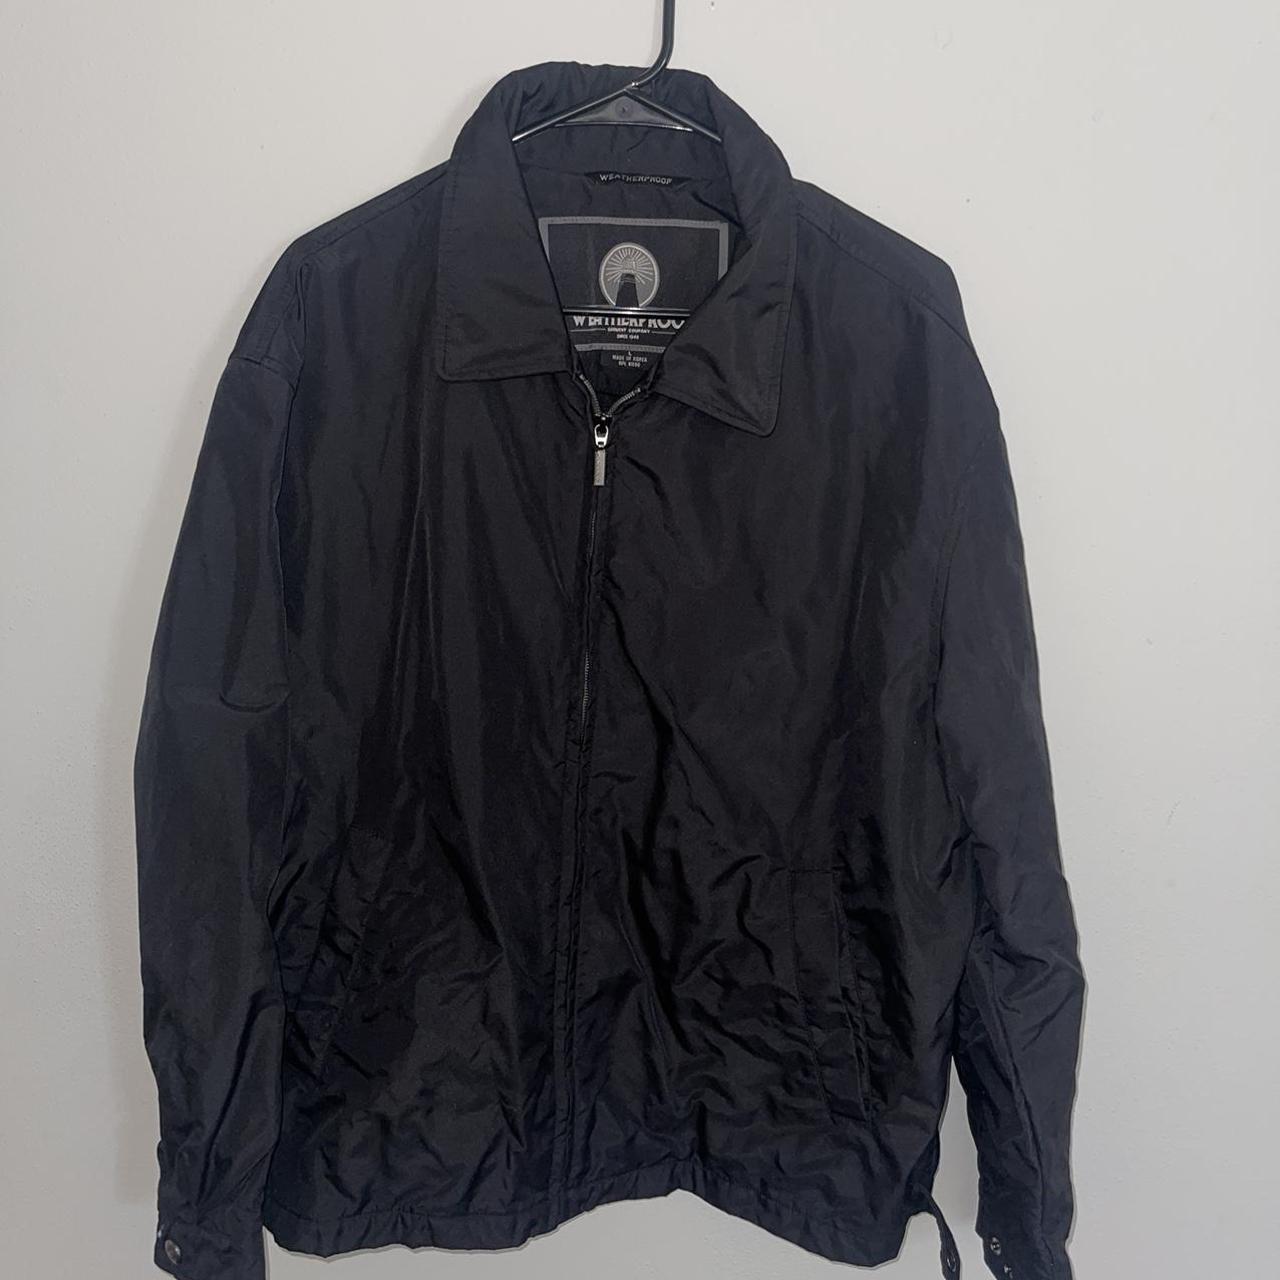 Weatherproof Garment Brand Microfiber Jacket - Depop